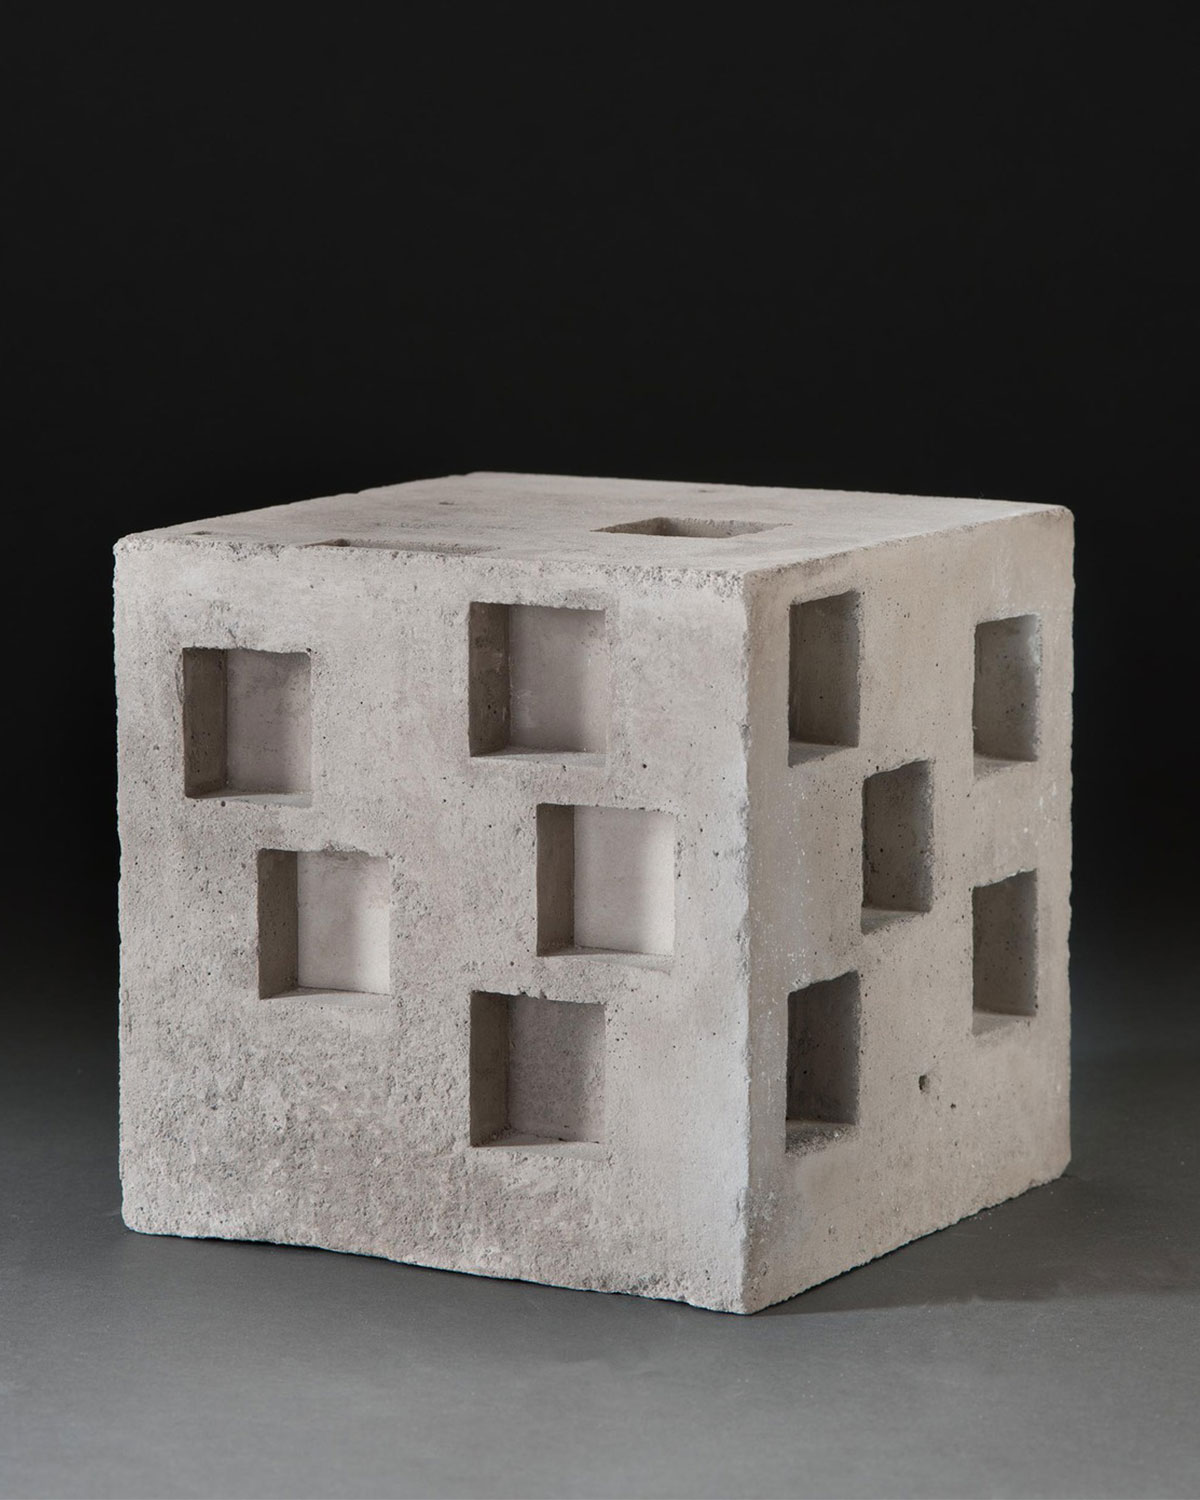 A concrete cube with windows cut into it